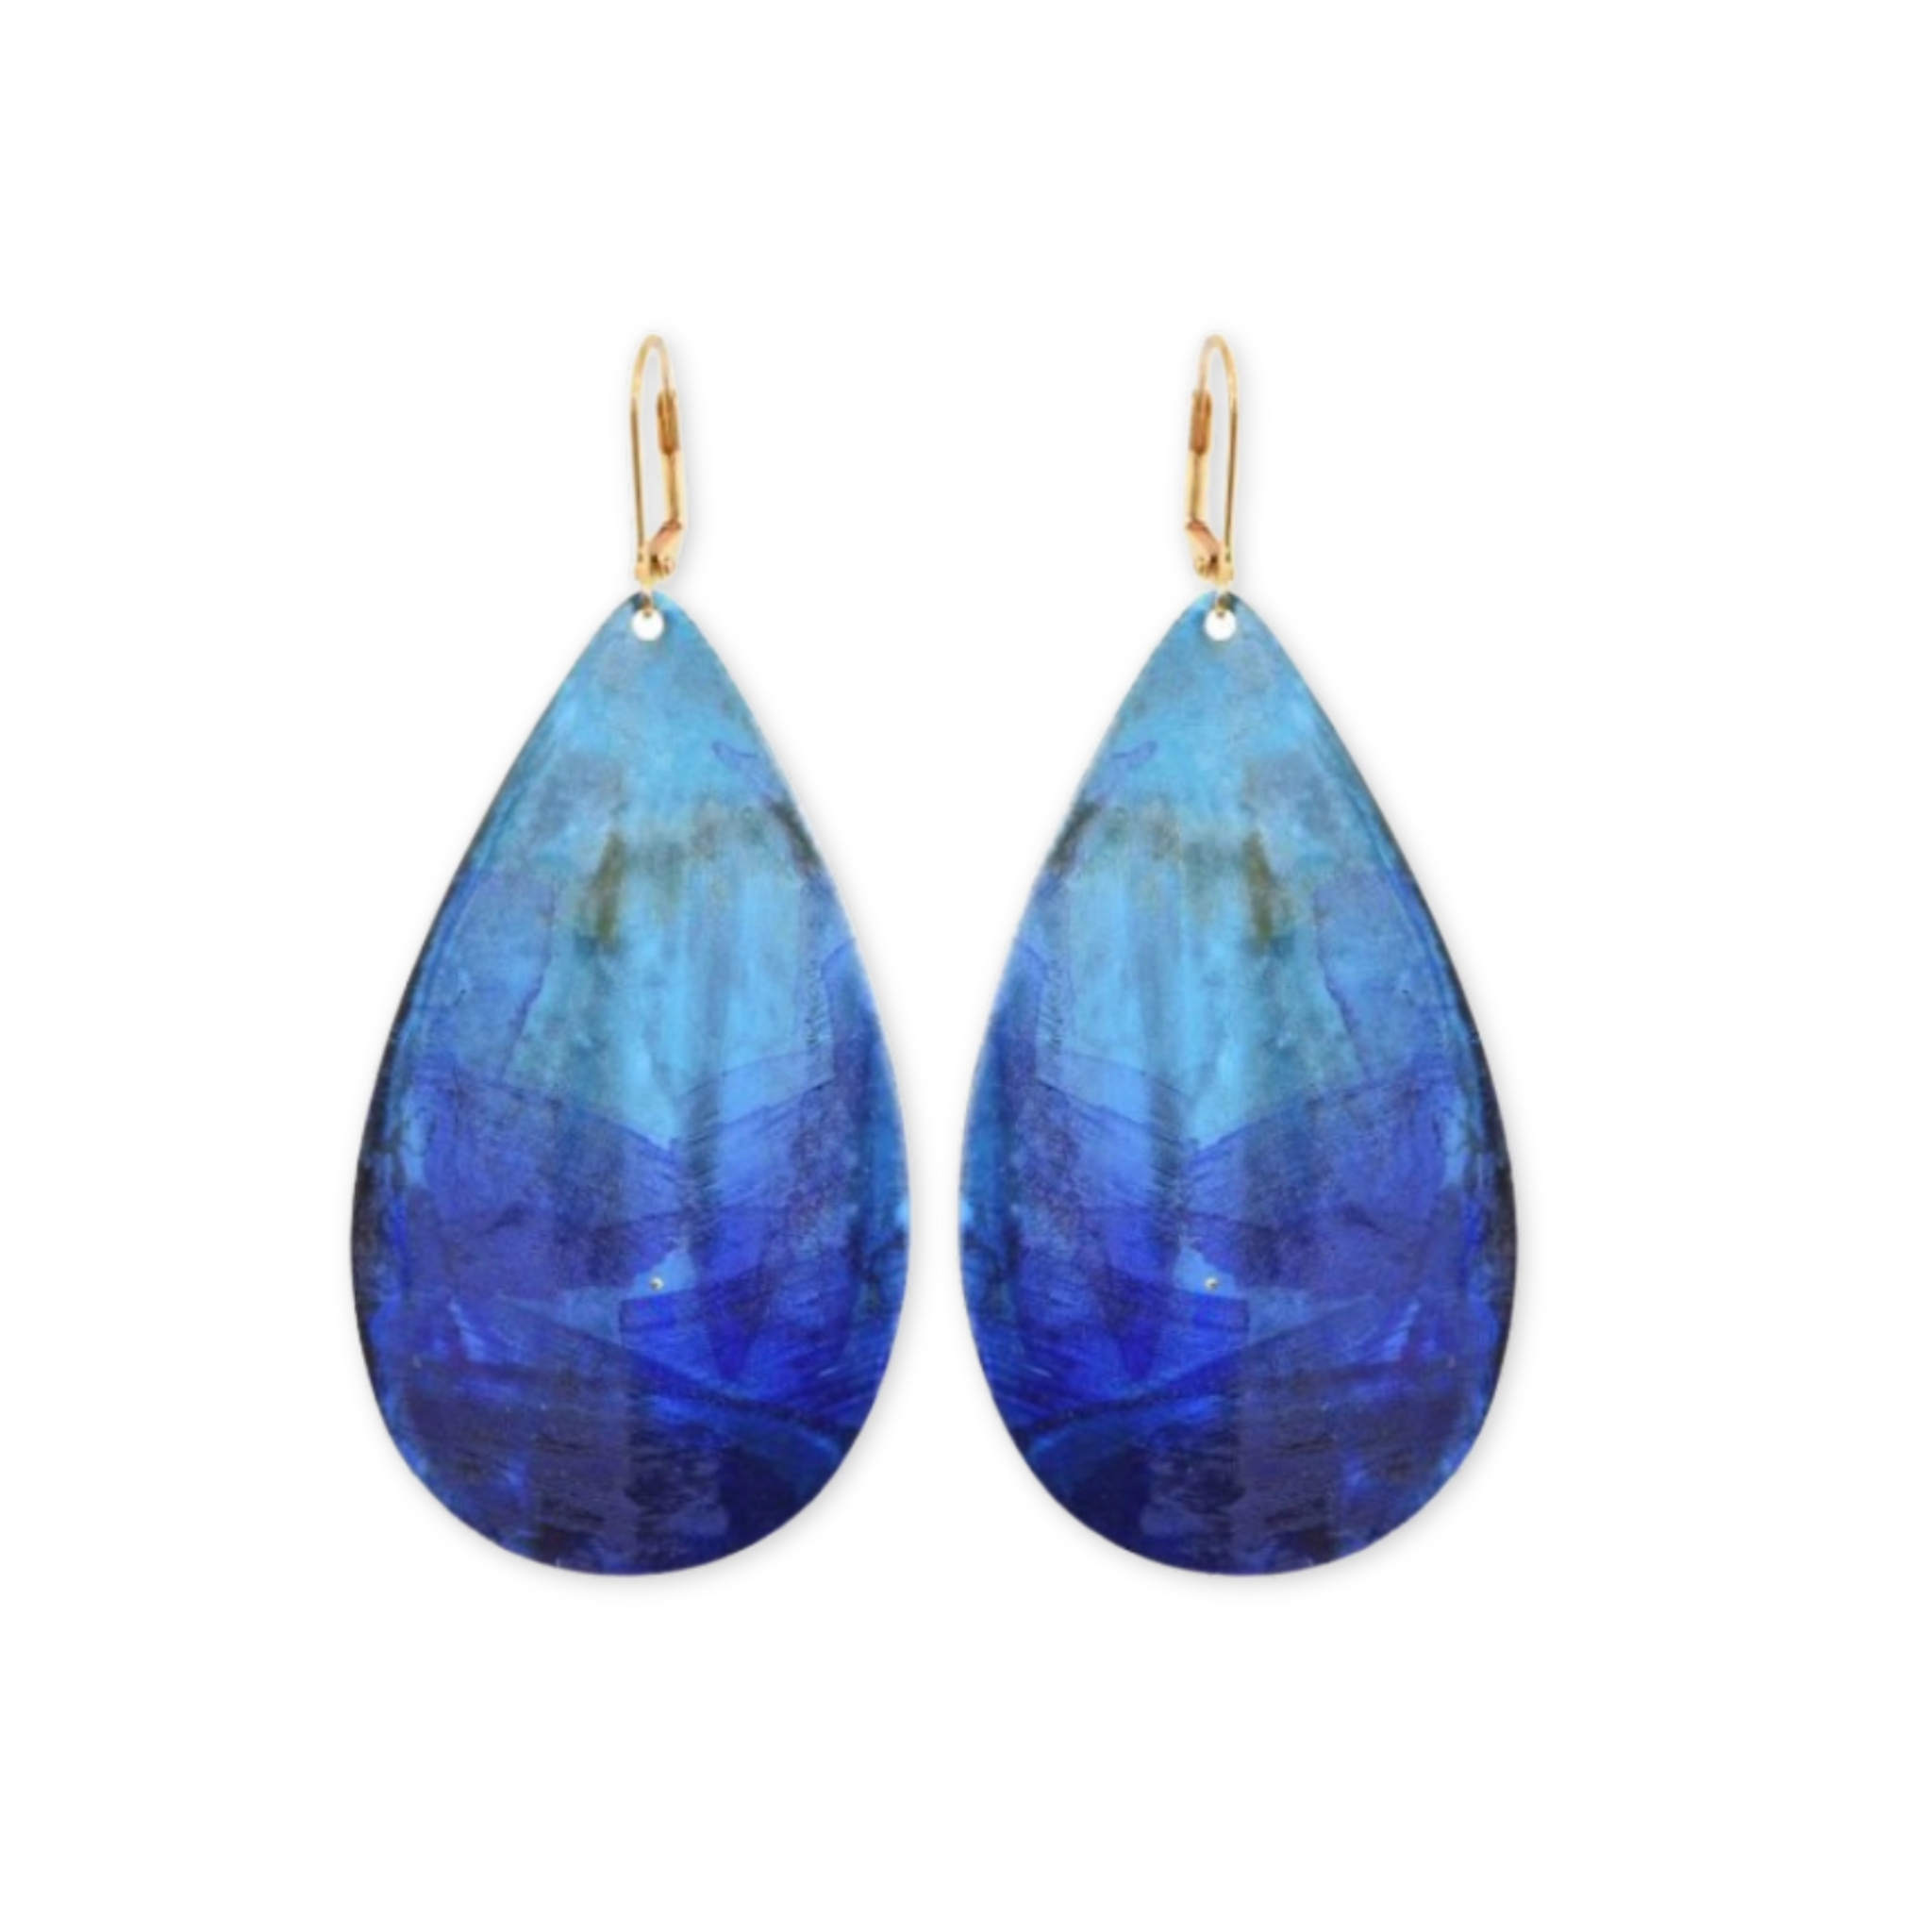 blue and patina teardrop shaped earrings